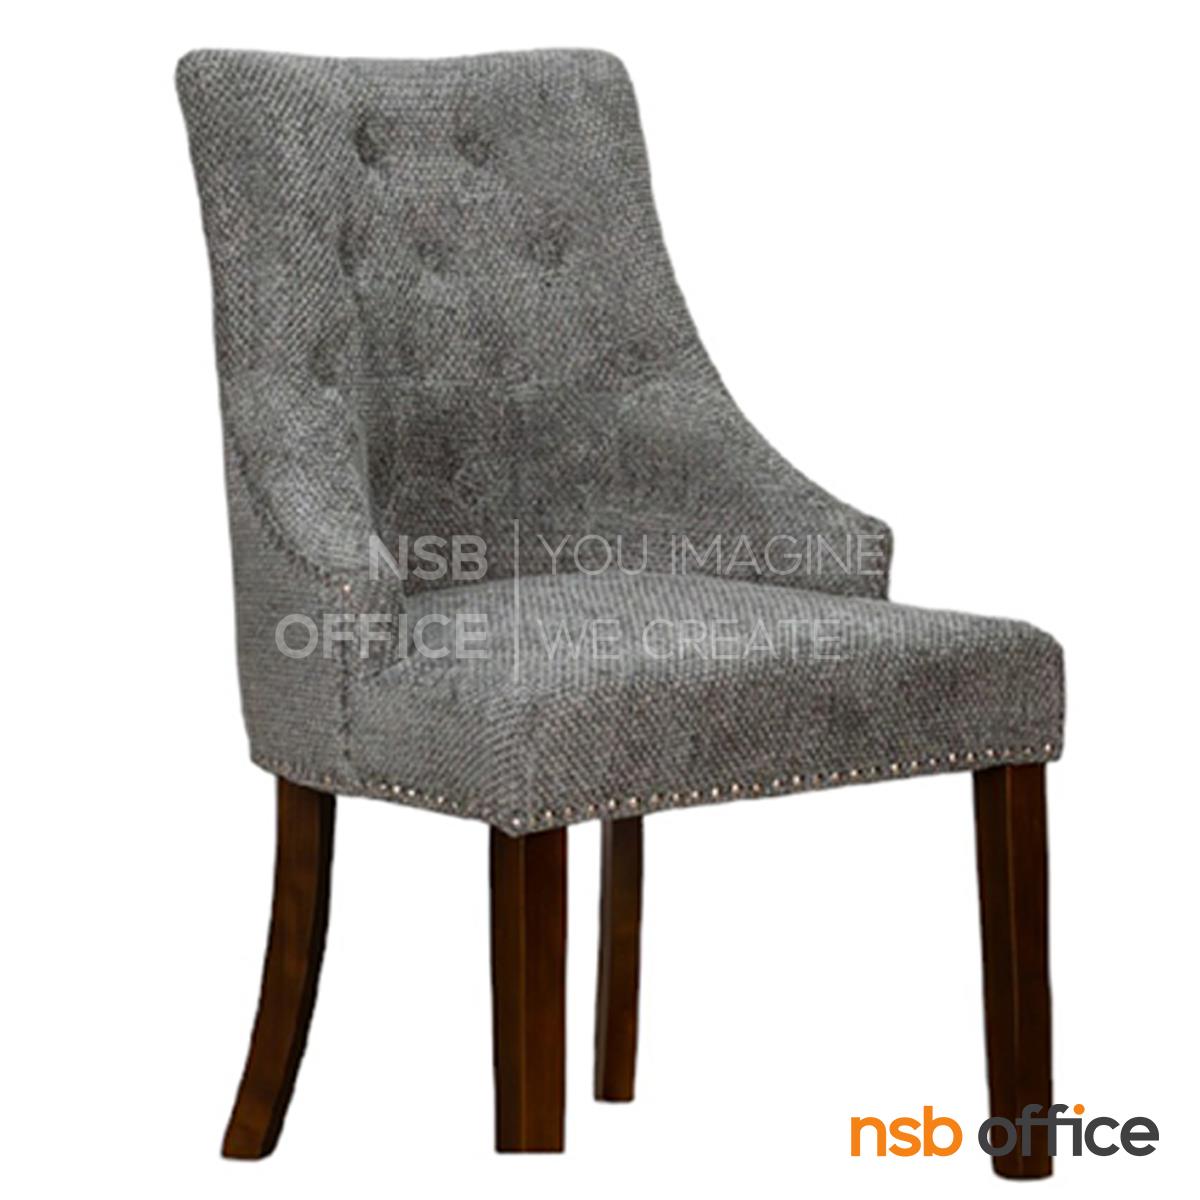 B29A501:เก้าอี้หุ้มผ้า รุ่น Horace (ฮอเรซ)  ขนาด 57W cm.  ขาไม้ (บรรจุ 2 ตัว/กล่อง)